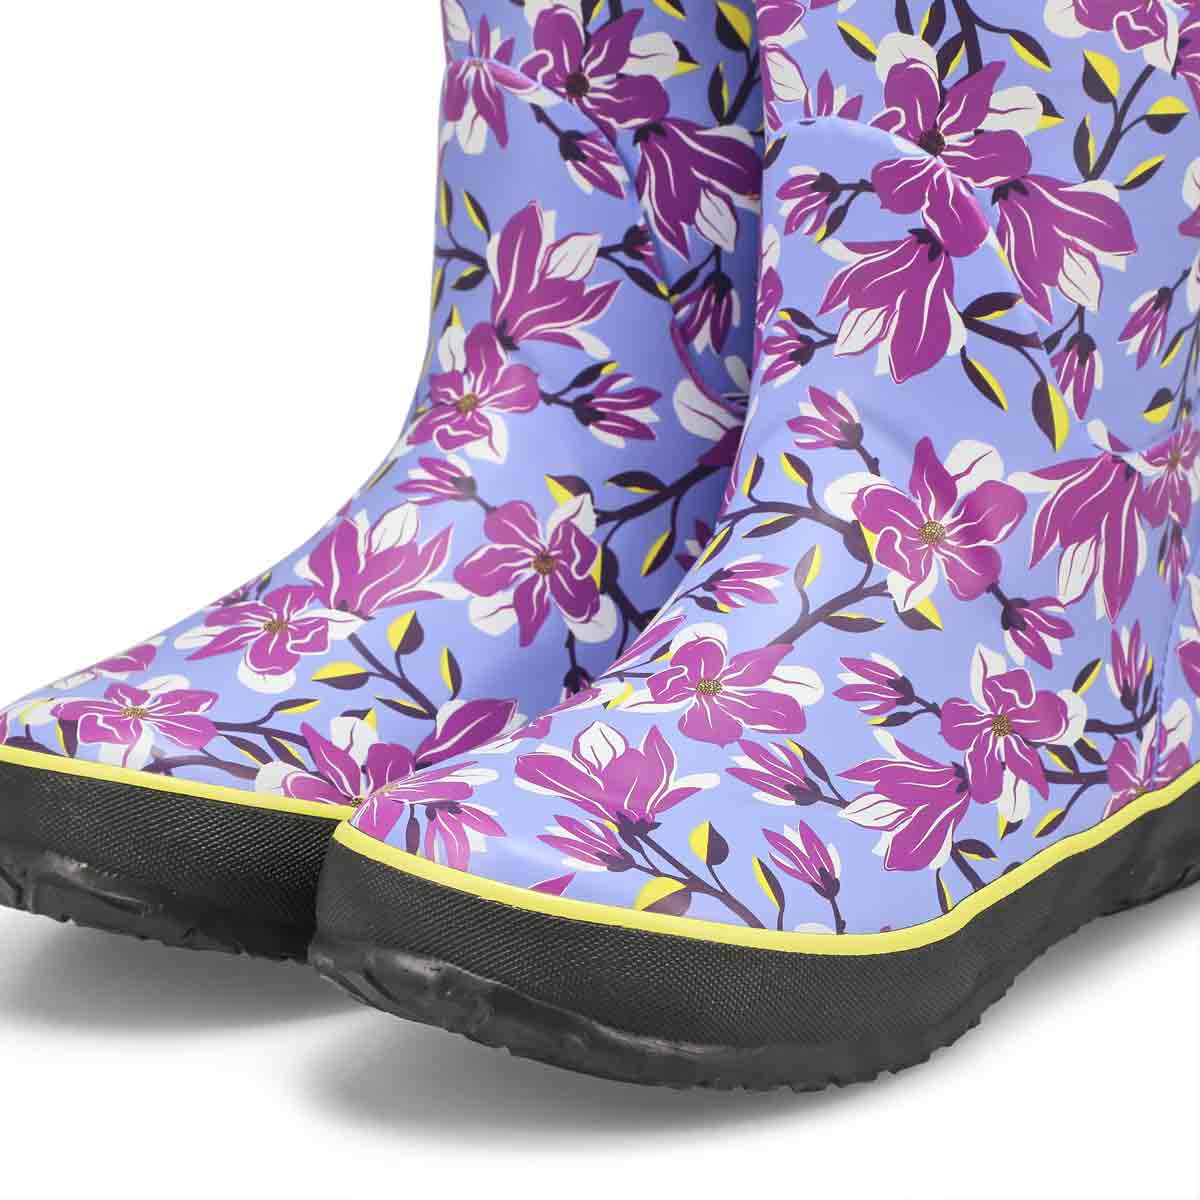 Girls' Magnolia Waterproof Rain Boot